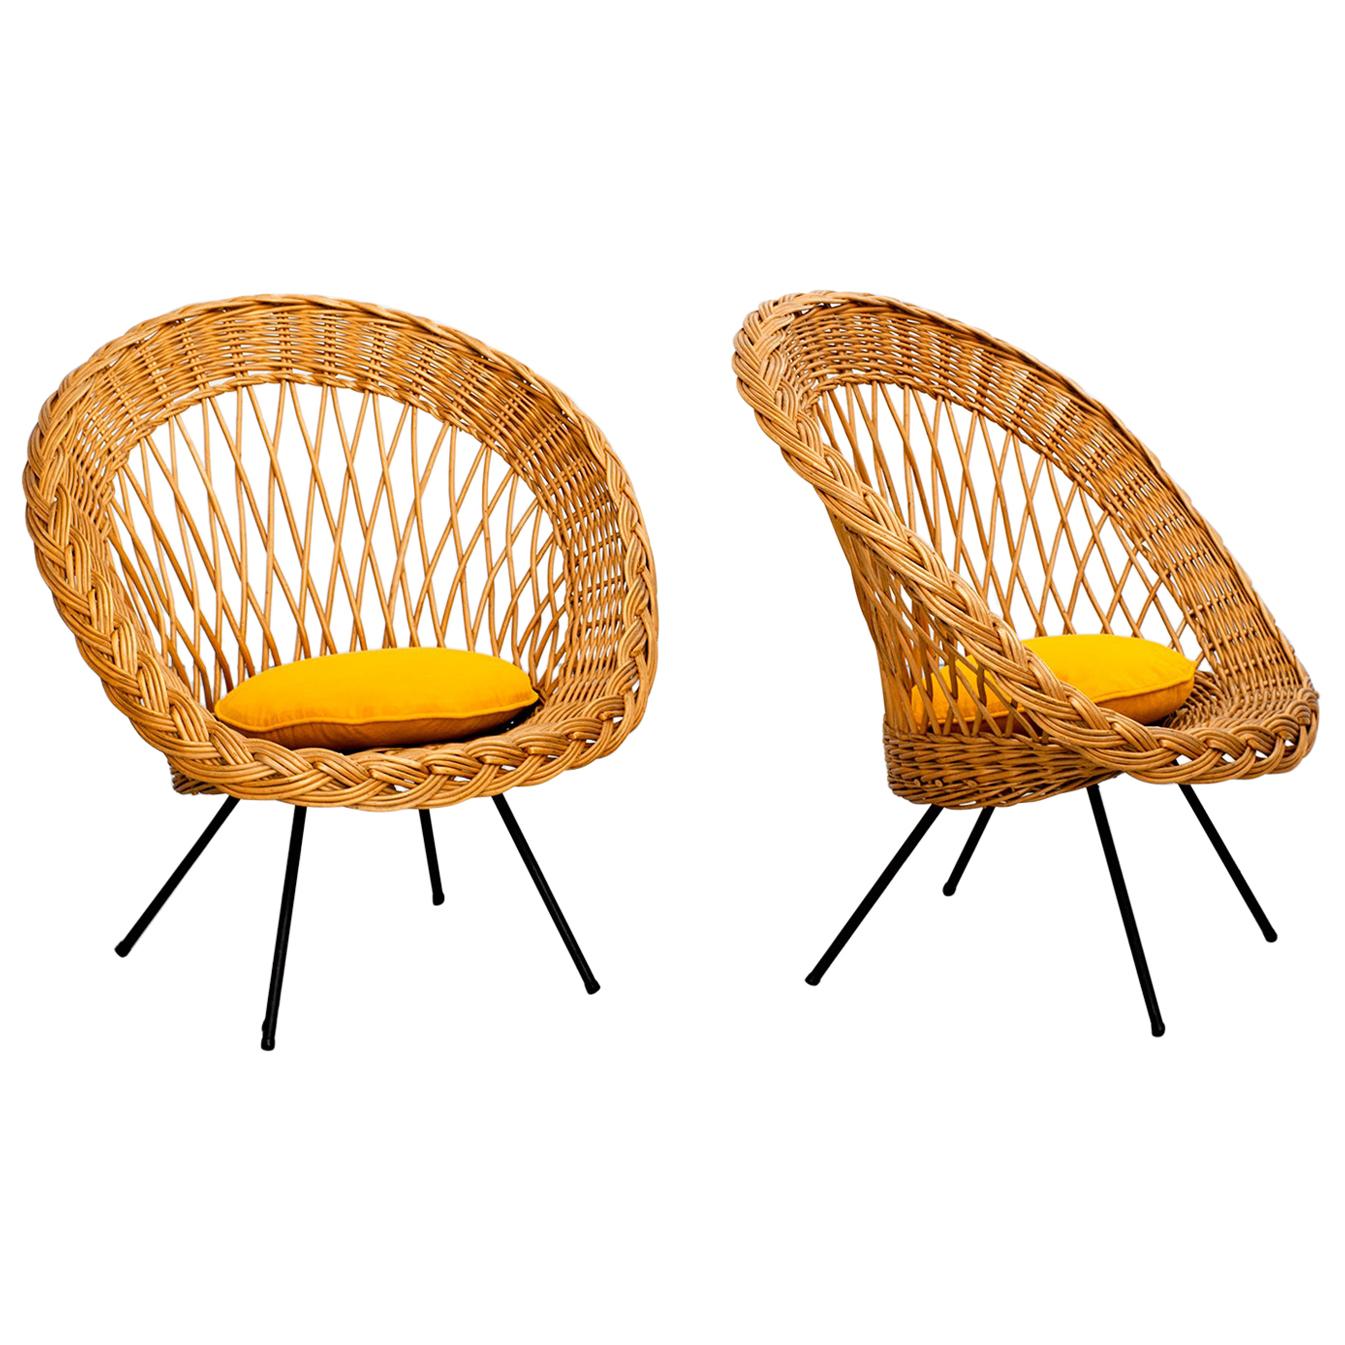 Italian Wicker Chairs